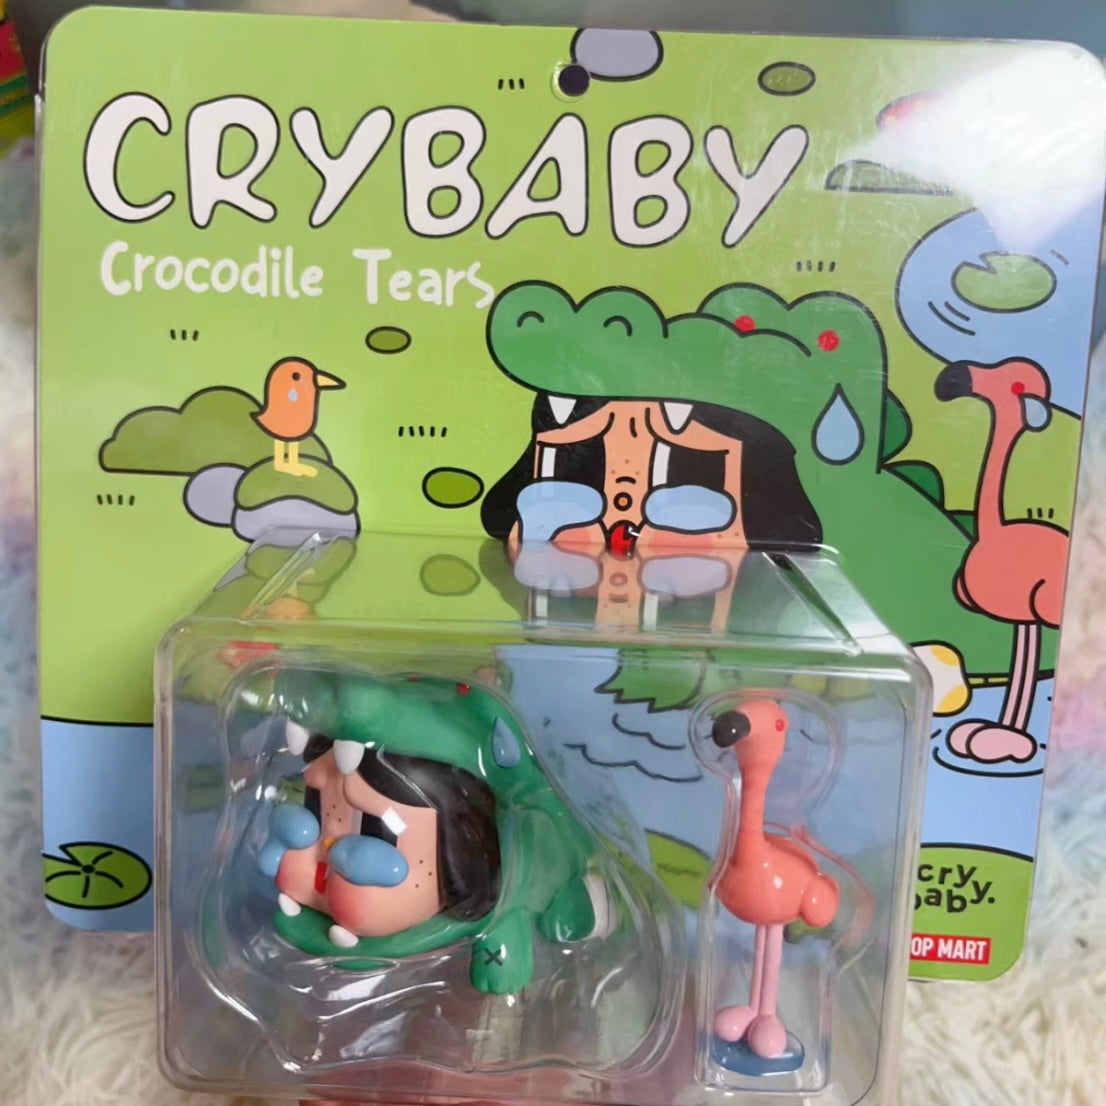 Crybaby Crocodile Tears Limited Edition